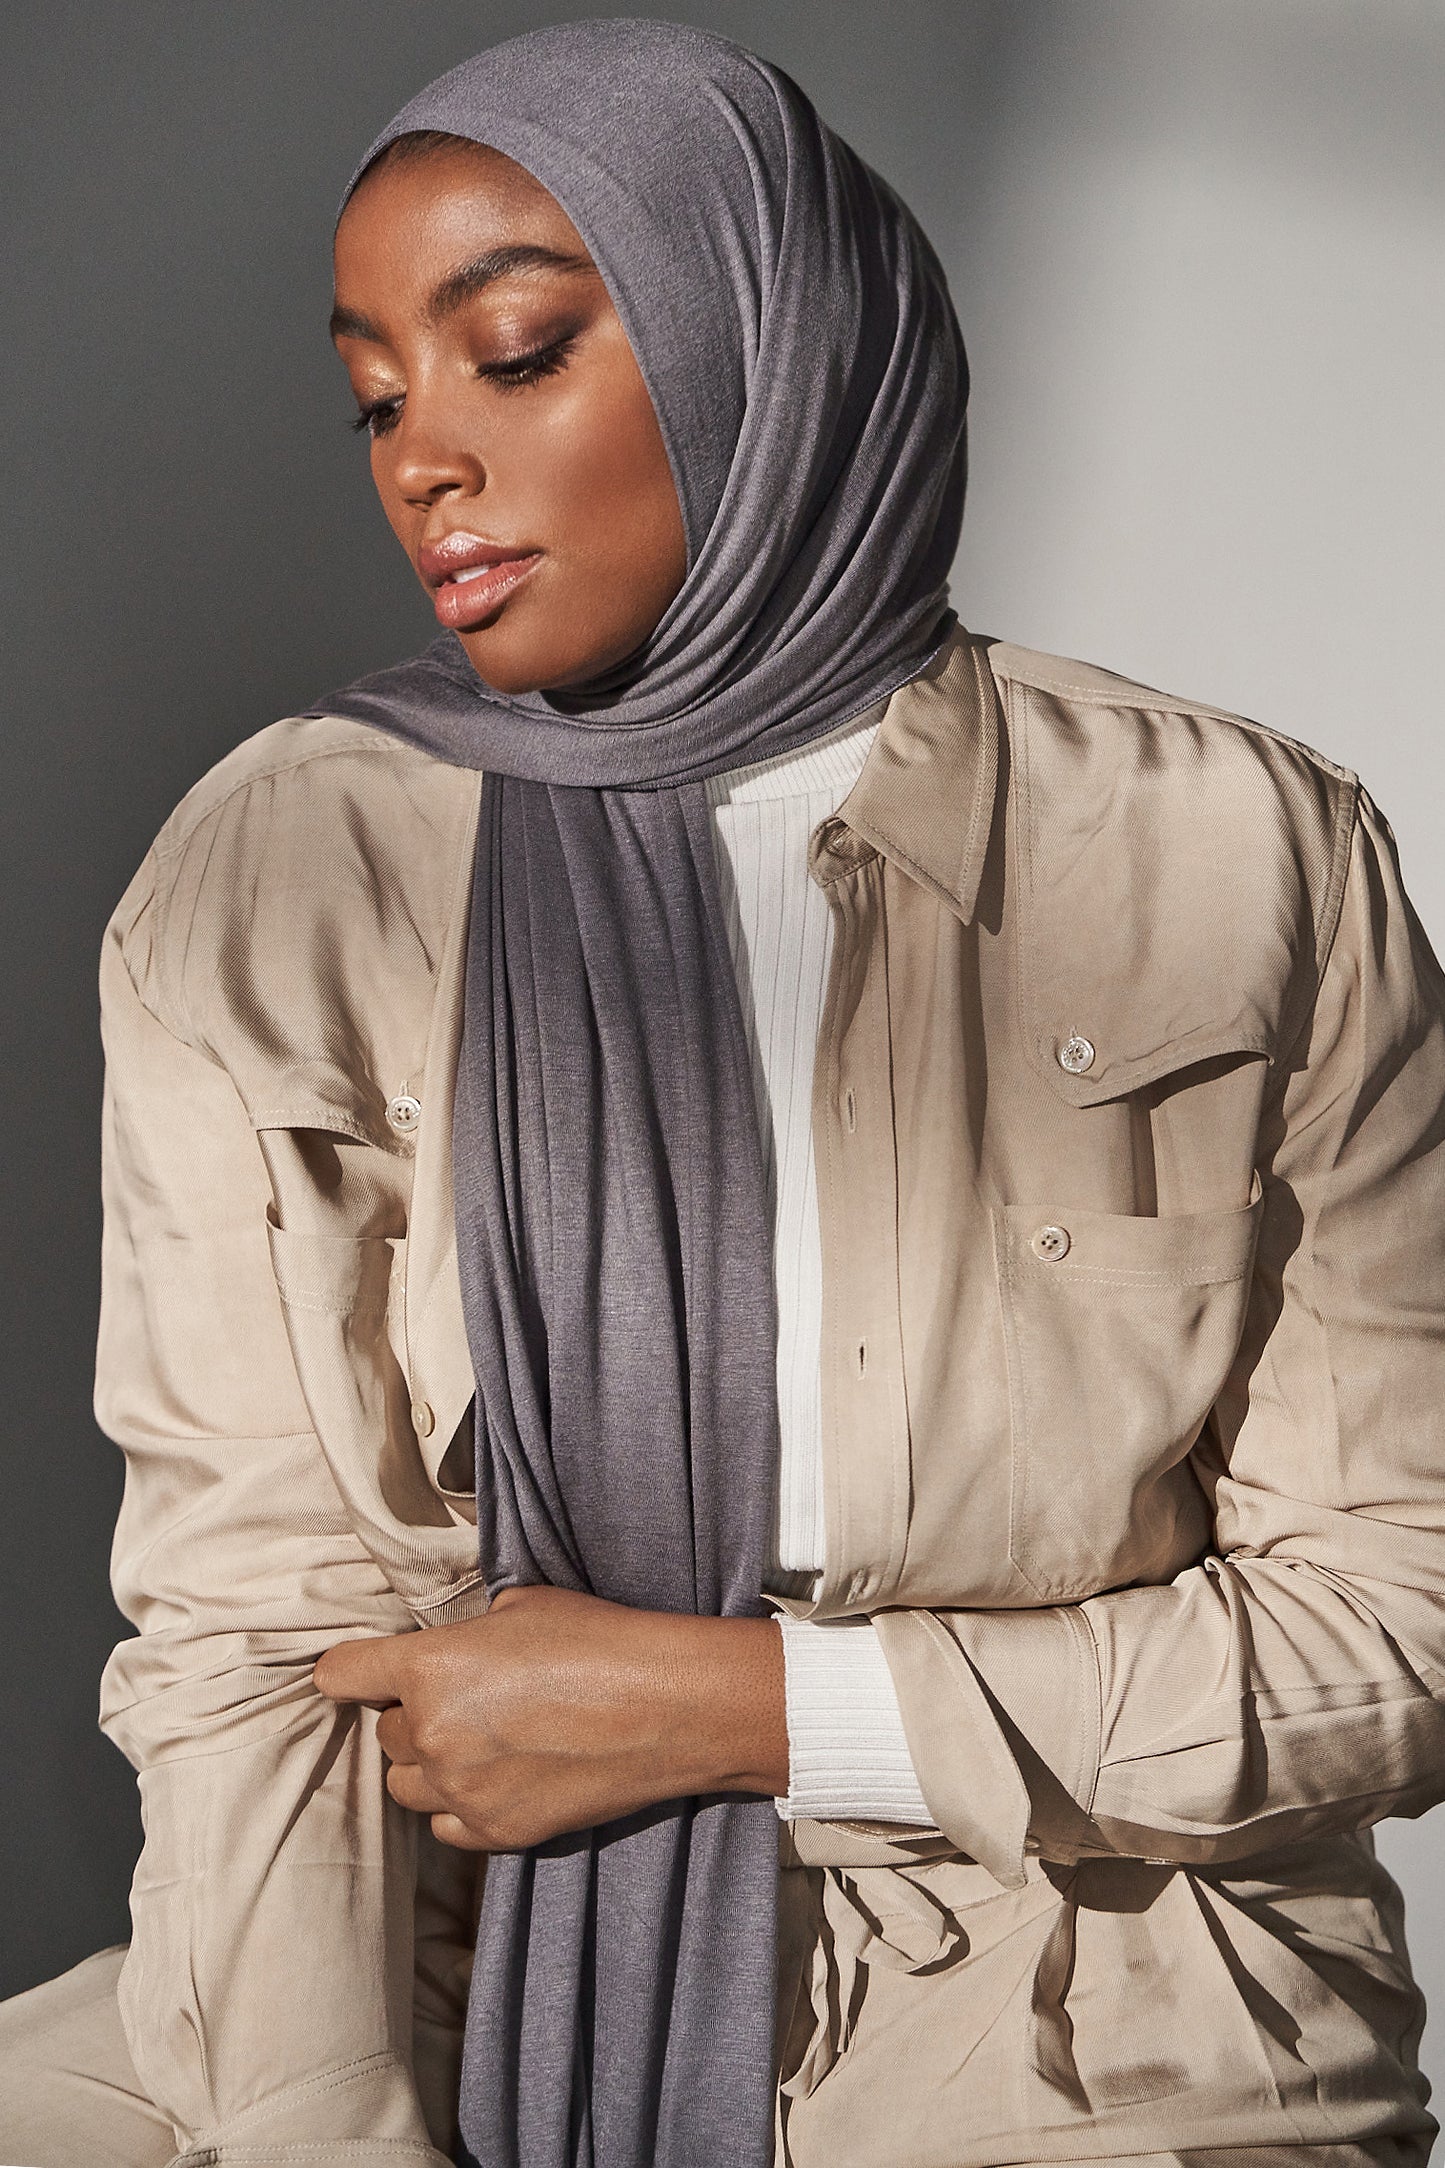 Premium Jersey Hijab - Graphite - Rectangle 65 x 27 / Graphite / Jersey